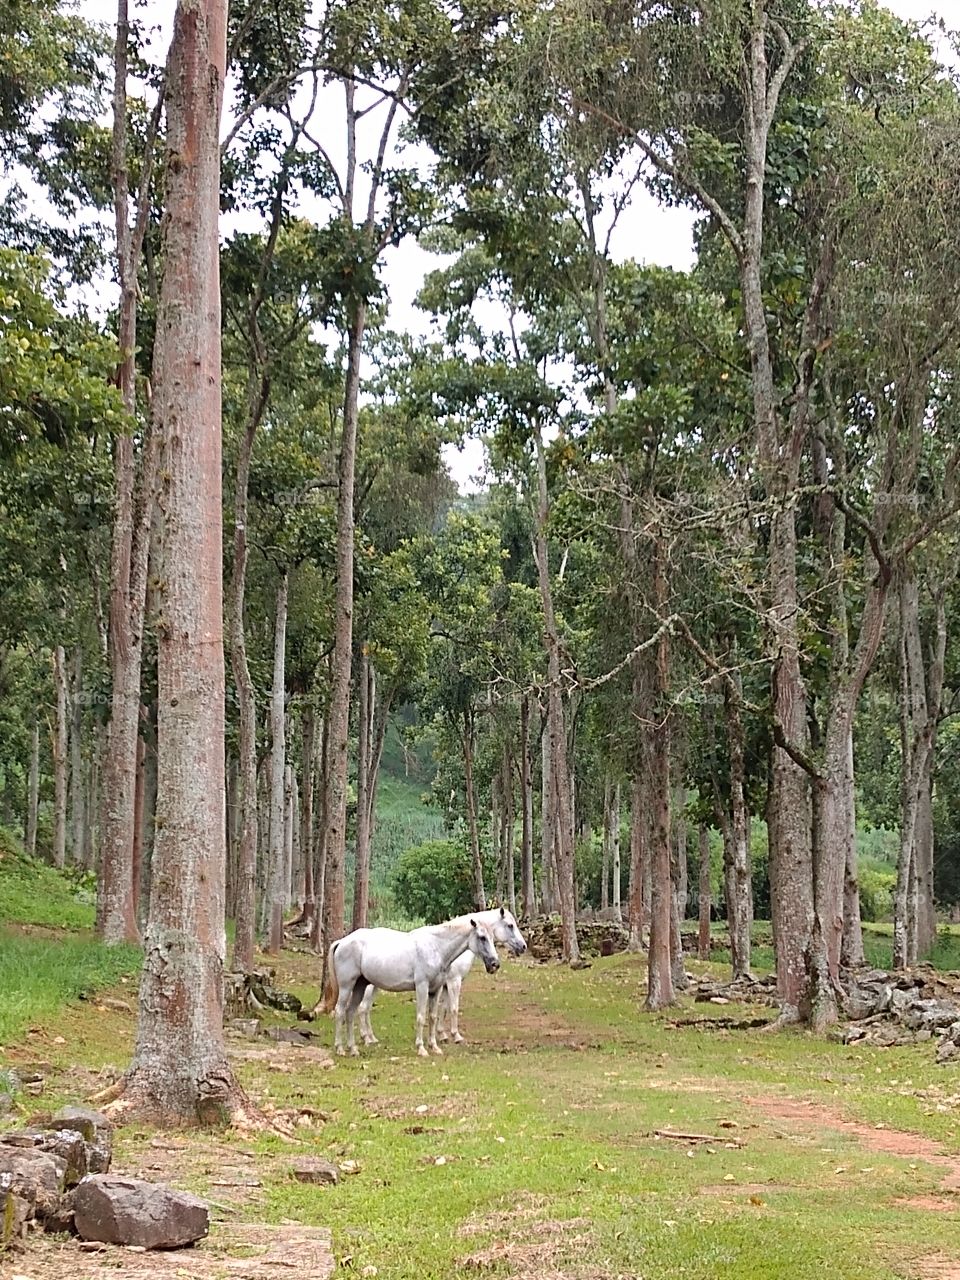 Horses at the archaeological site of Sao Joao Marcos -Mangaratiba, Rio de Janeiro.